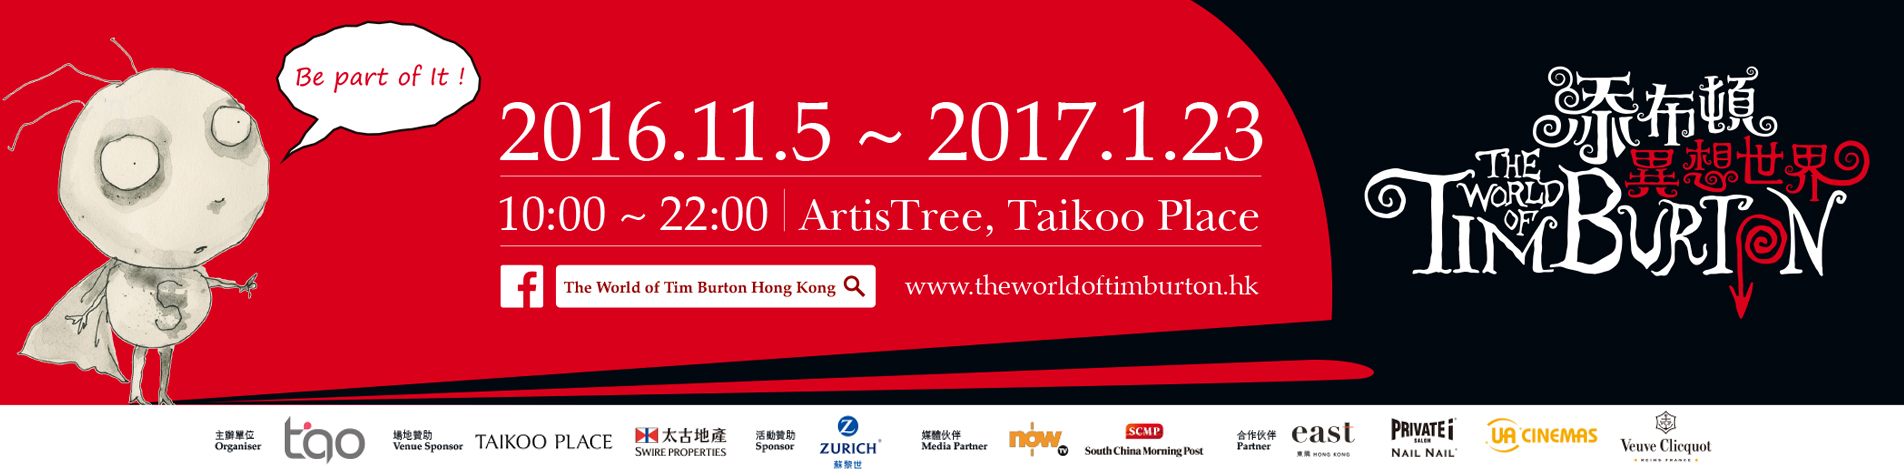 The World of Tim Burton, Hong Kong